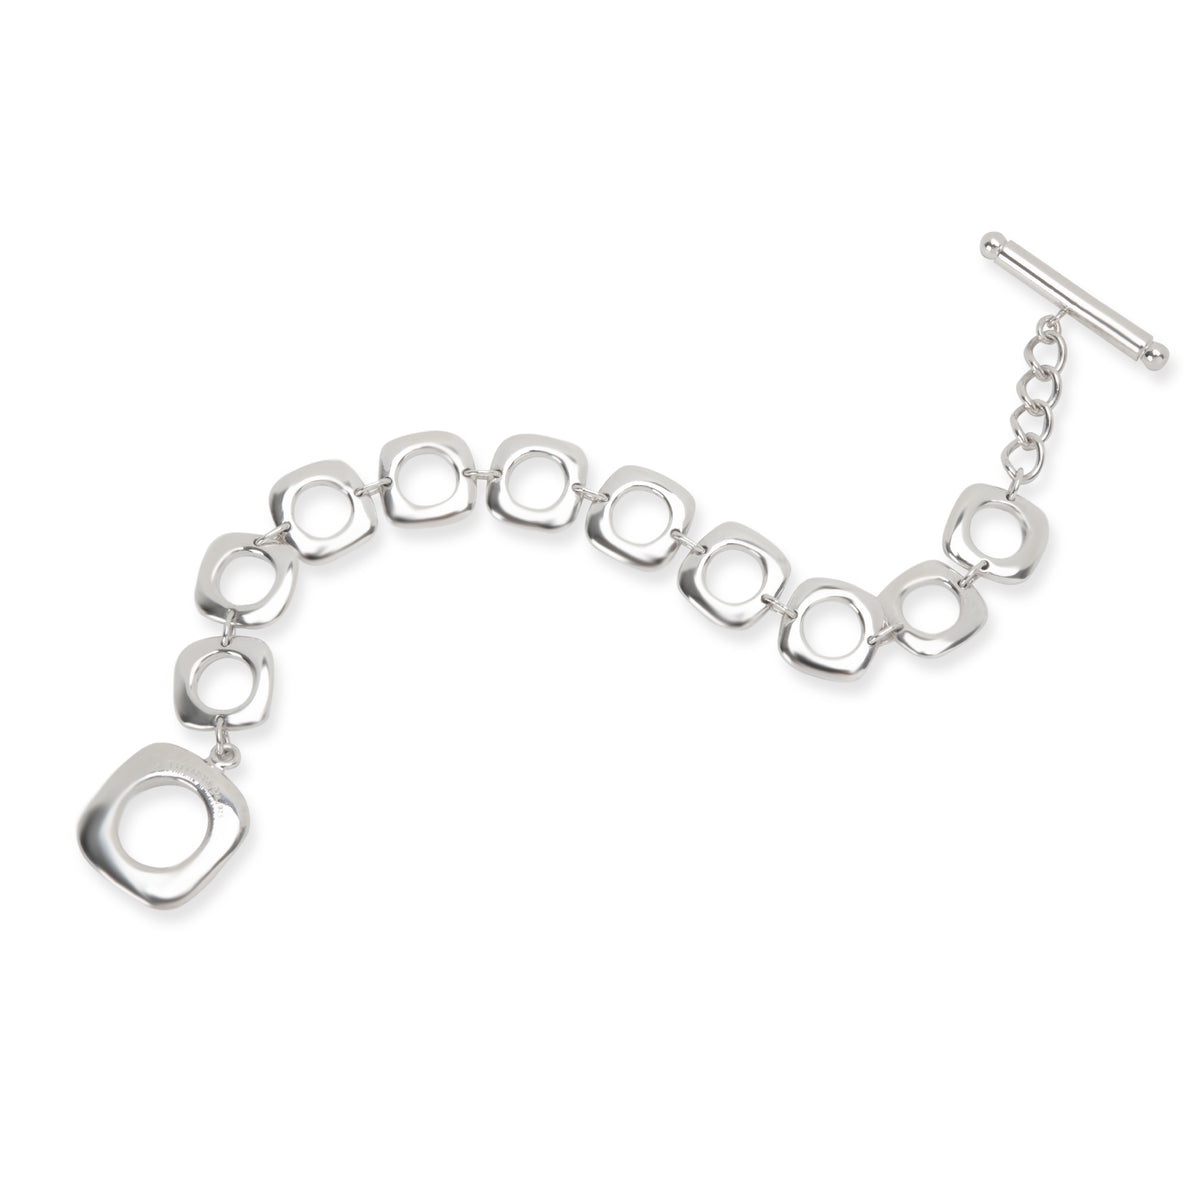 Tiffany & Co. Square Toggle Bracelet in Sterling Silver